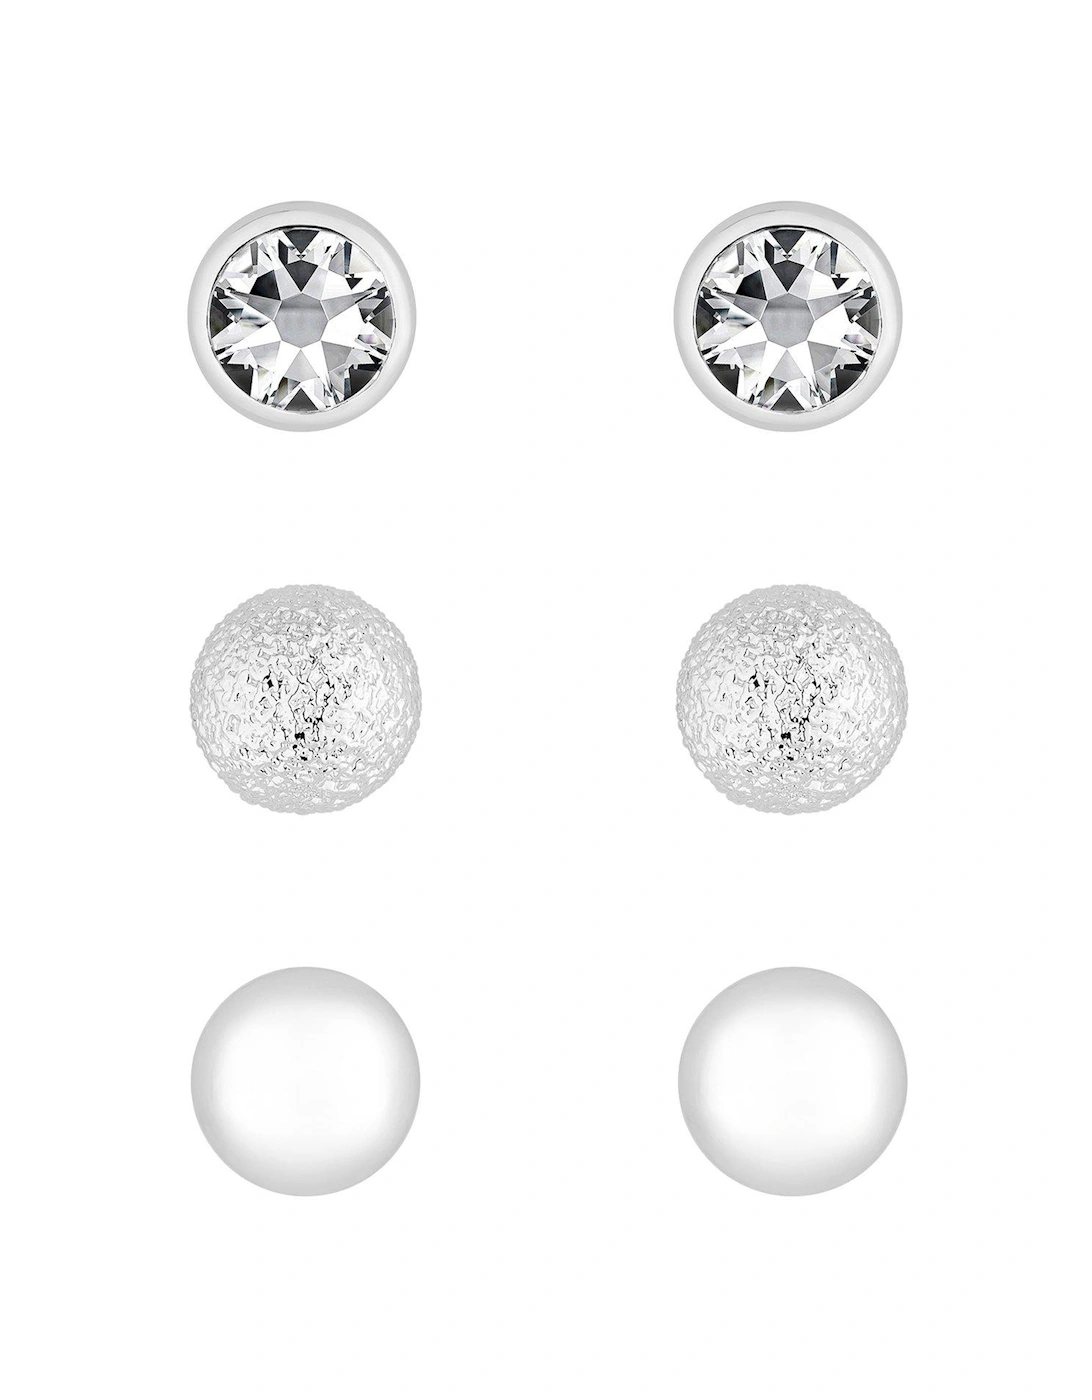 Silver Plated Crystal Stud Earrings - Pack of 3, 2 of 1